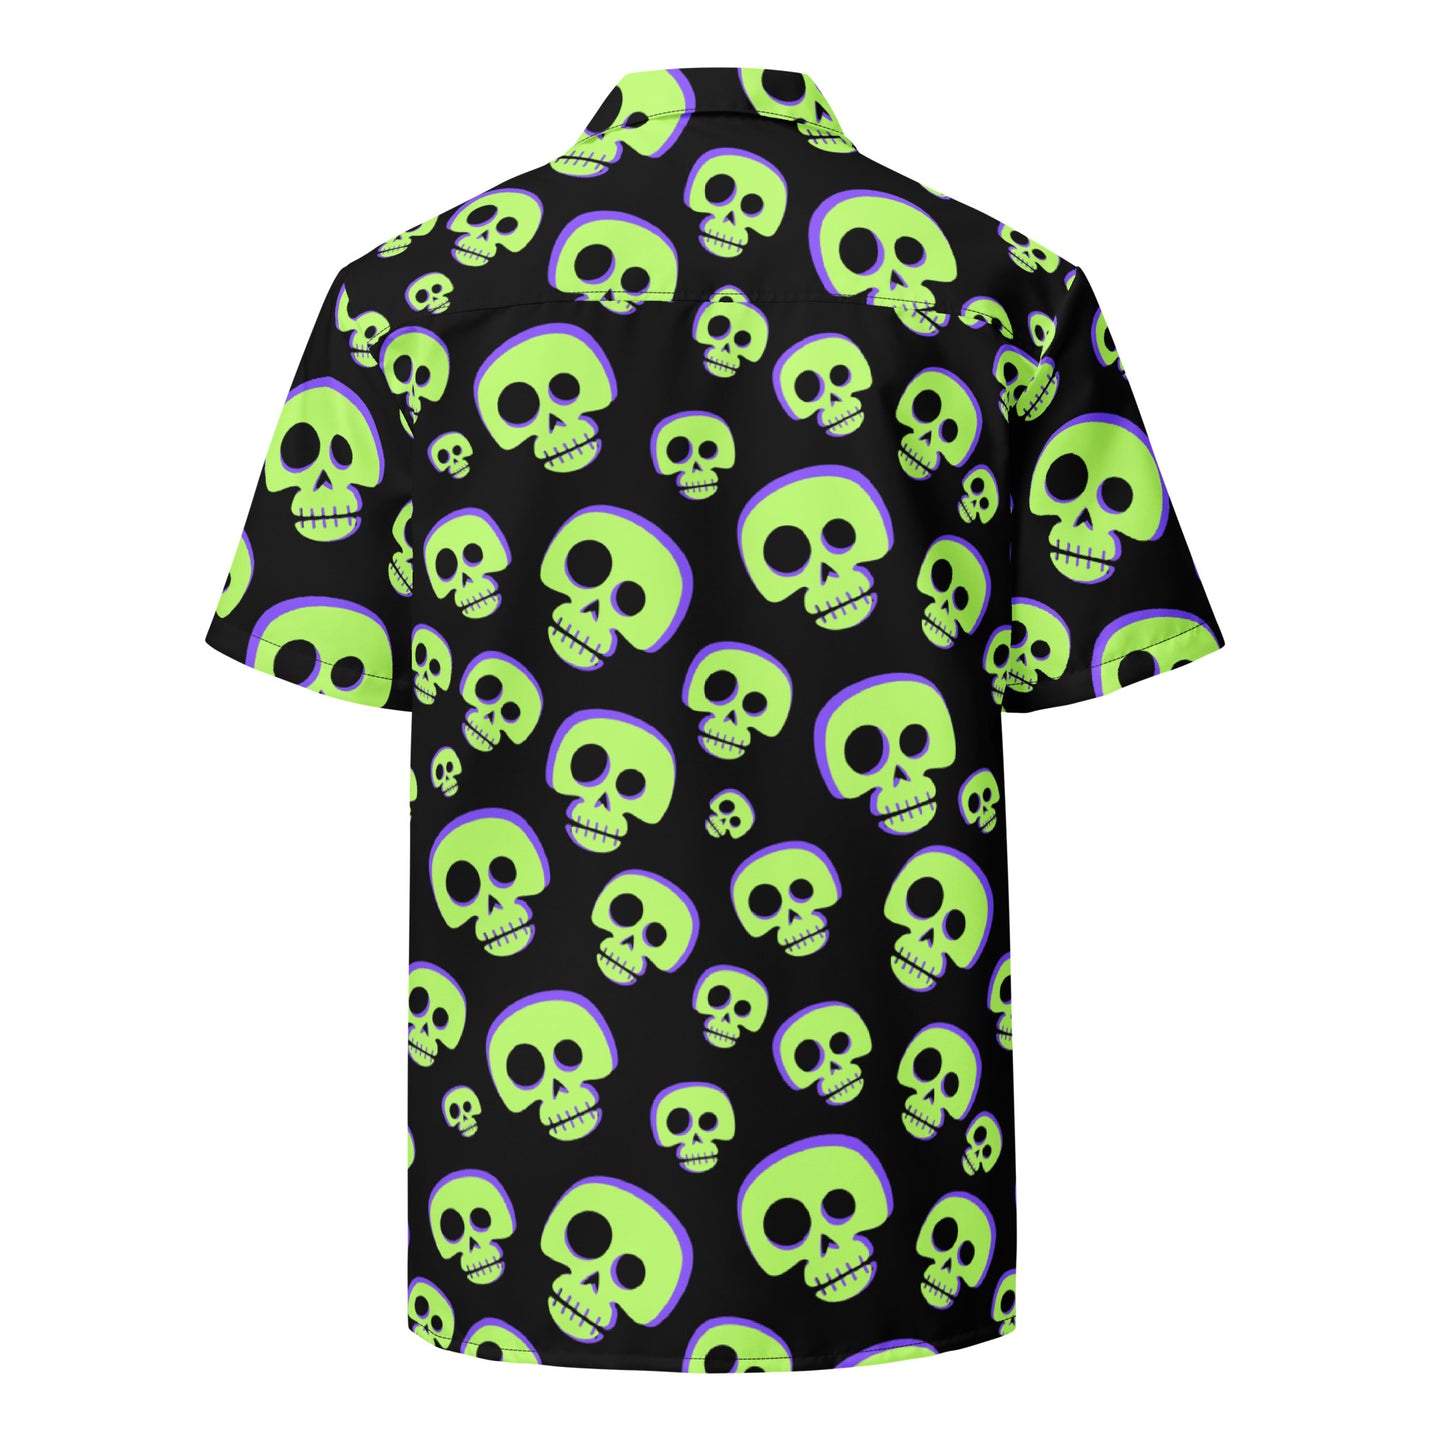 "The Zombie" Unisex button shirt